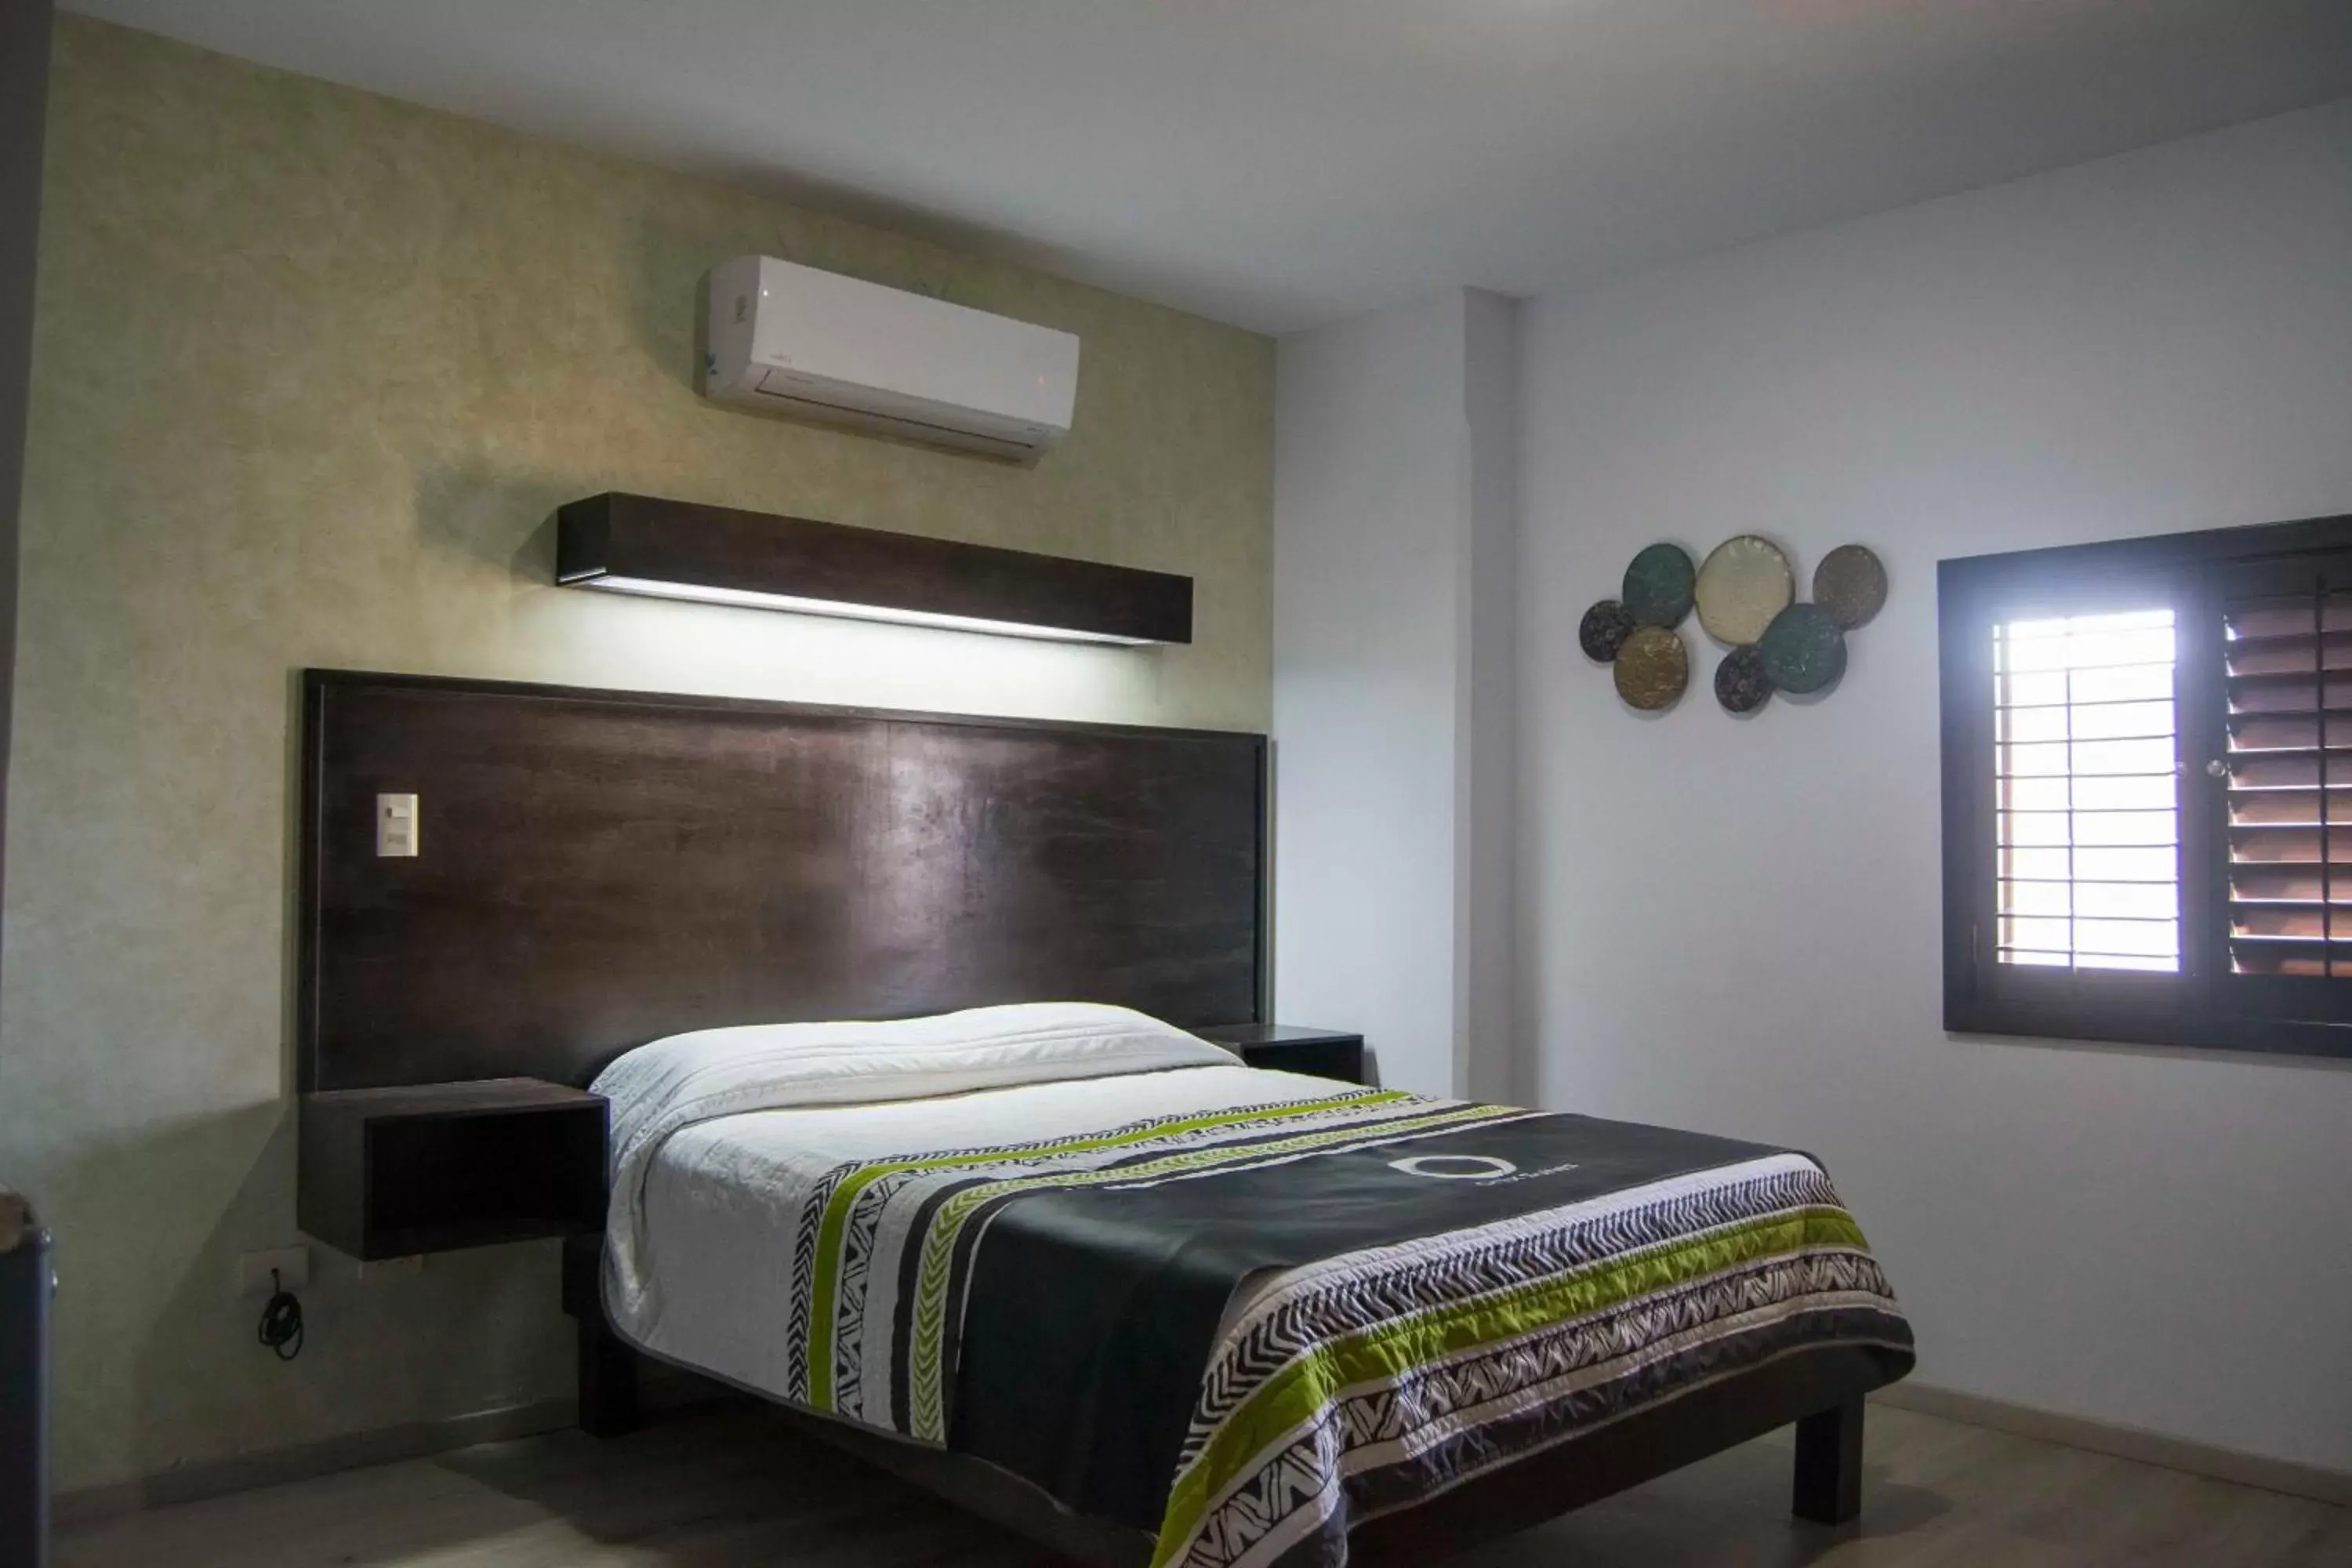 Bed in Hotel Onix Suites